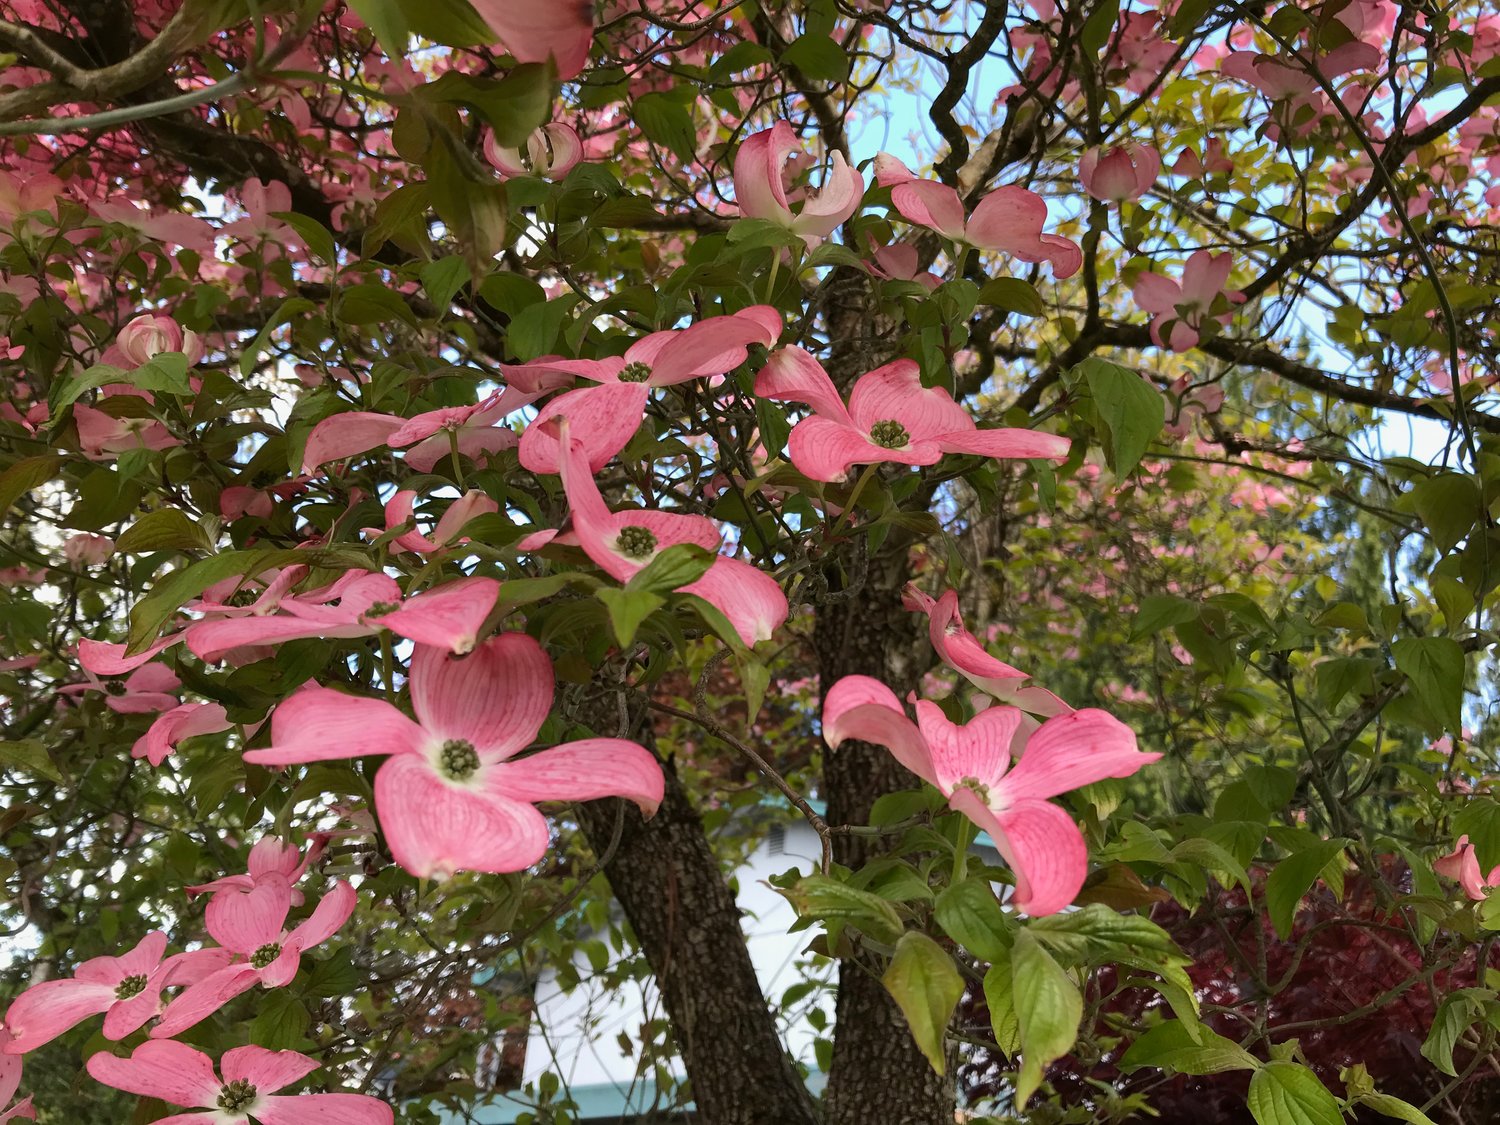 Look for pink dogwood trees in bloom in every neighborhood this week.